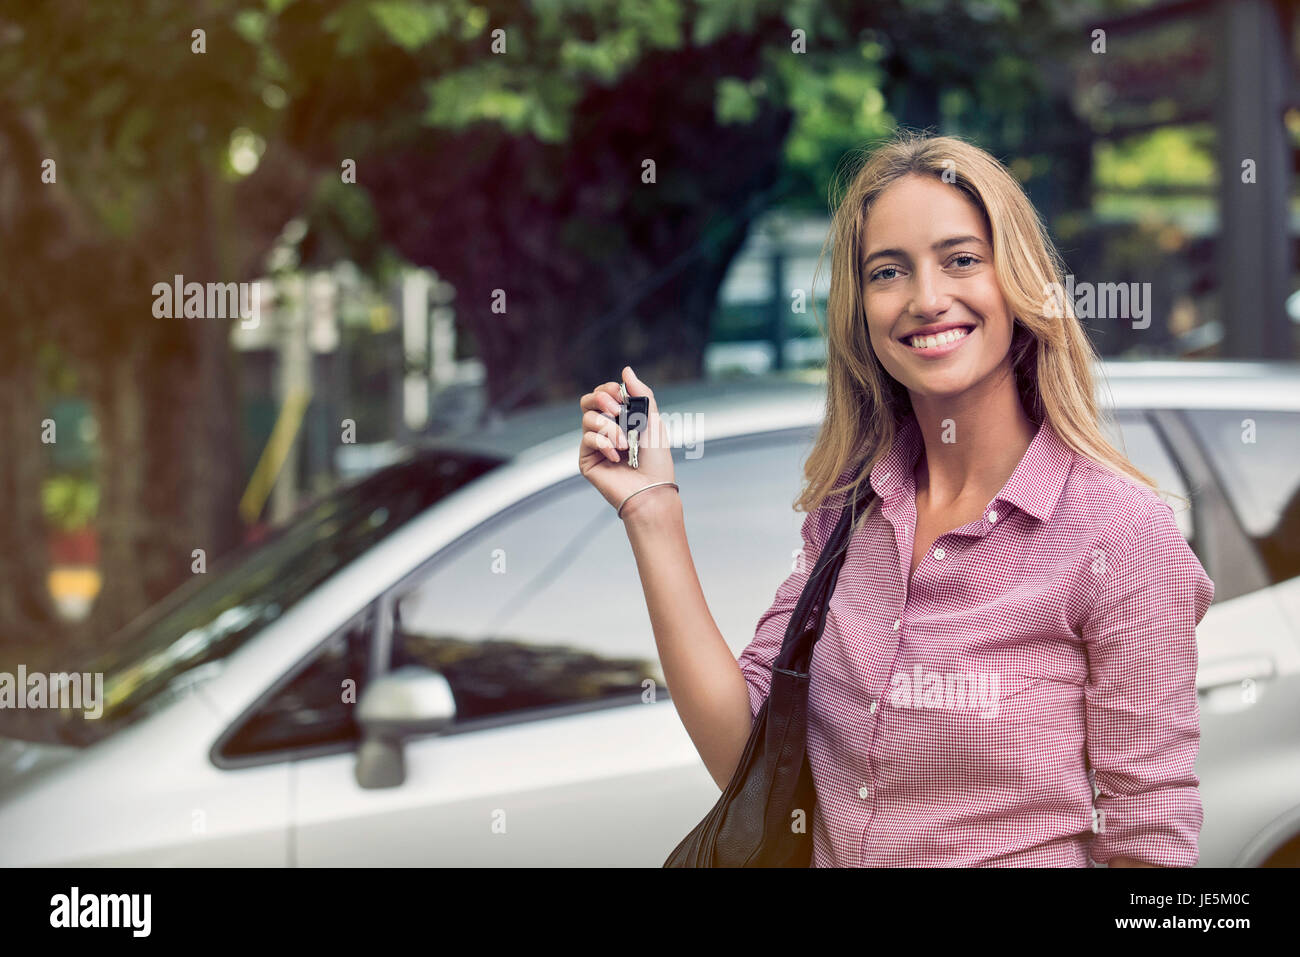 Young woman holding car keys, smiling, portrait Banque D'Images